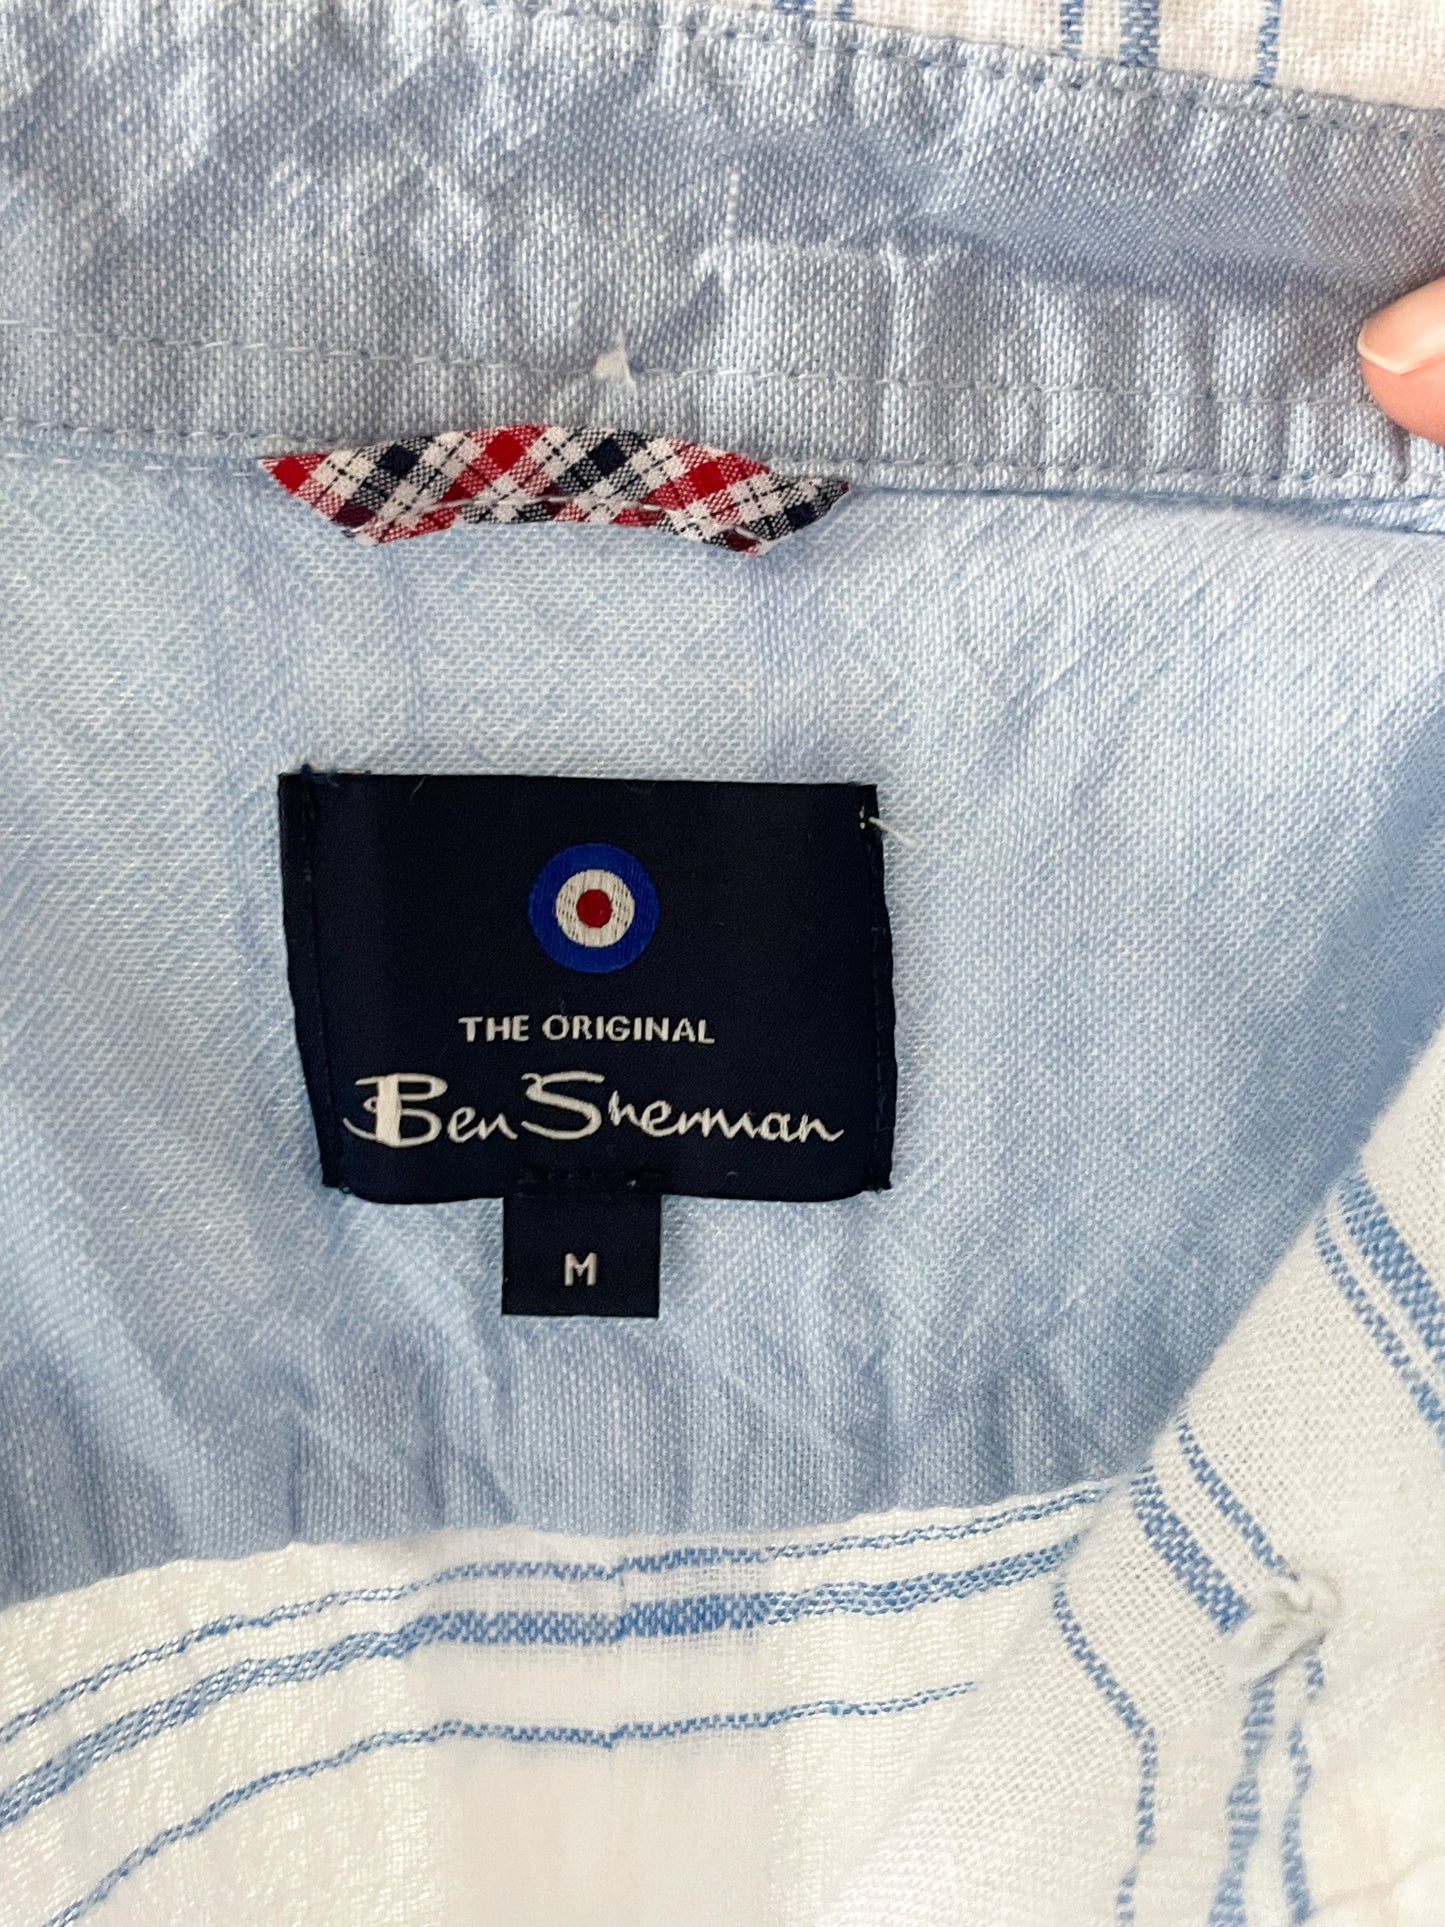 Ben Sherman Linen Blend Blue White Strip Button Front Top - Medium